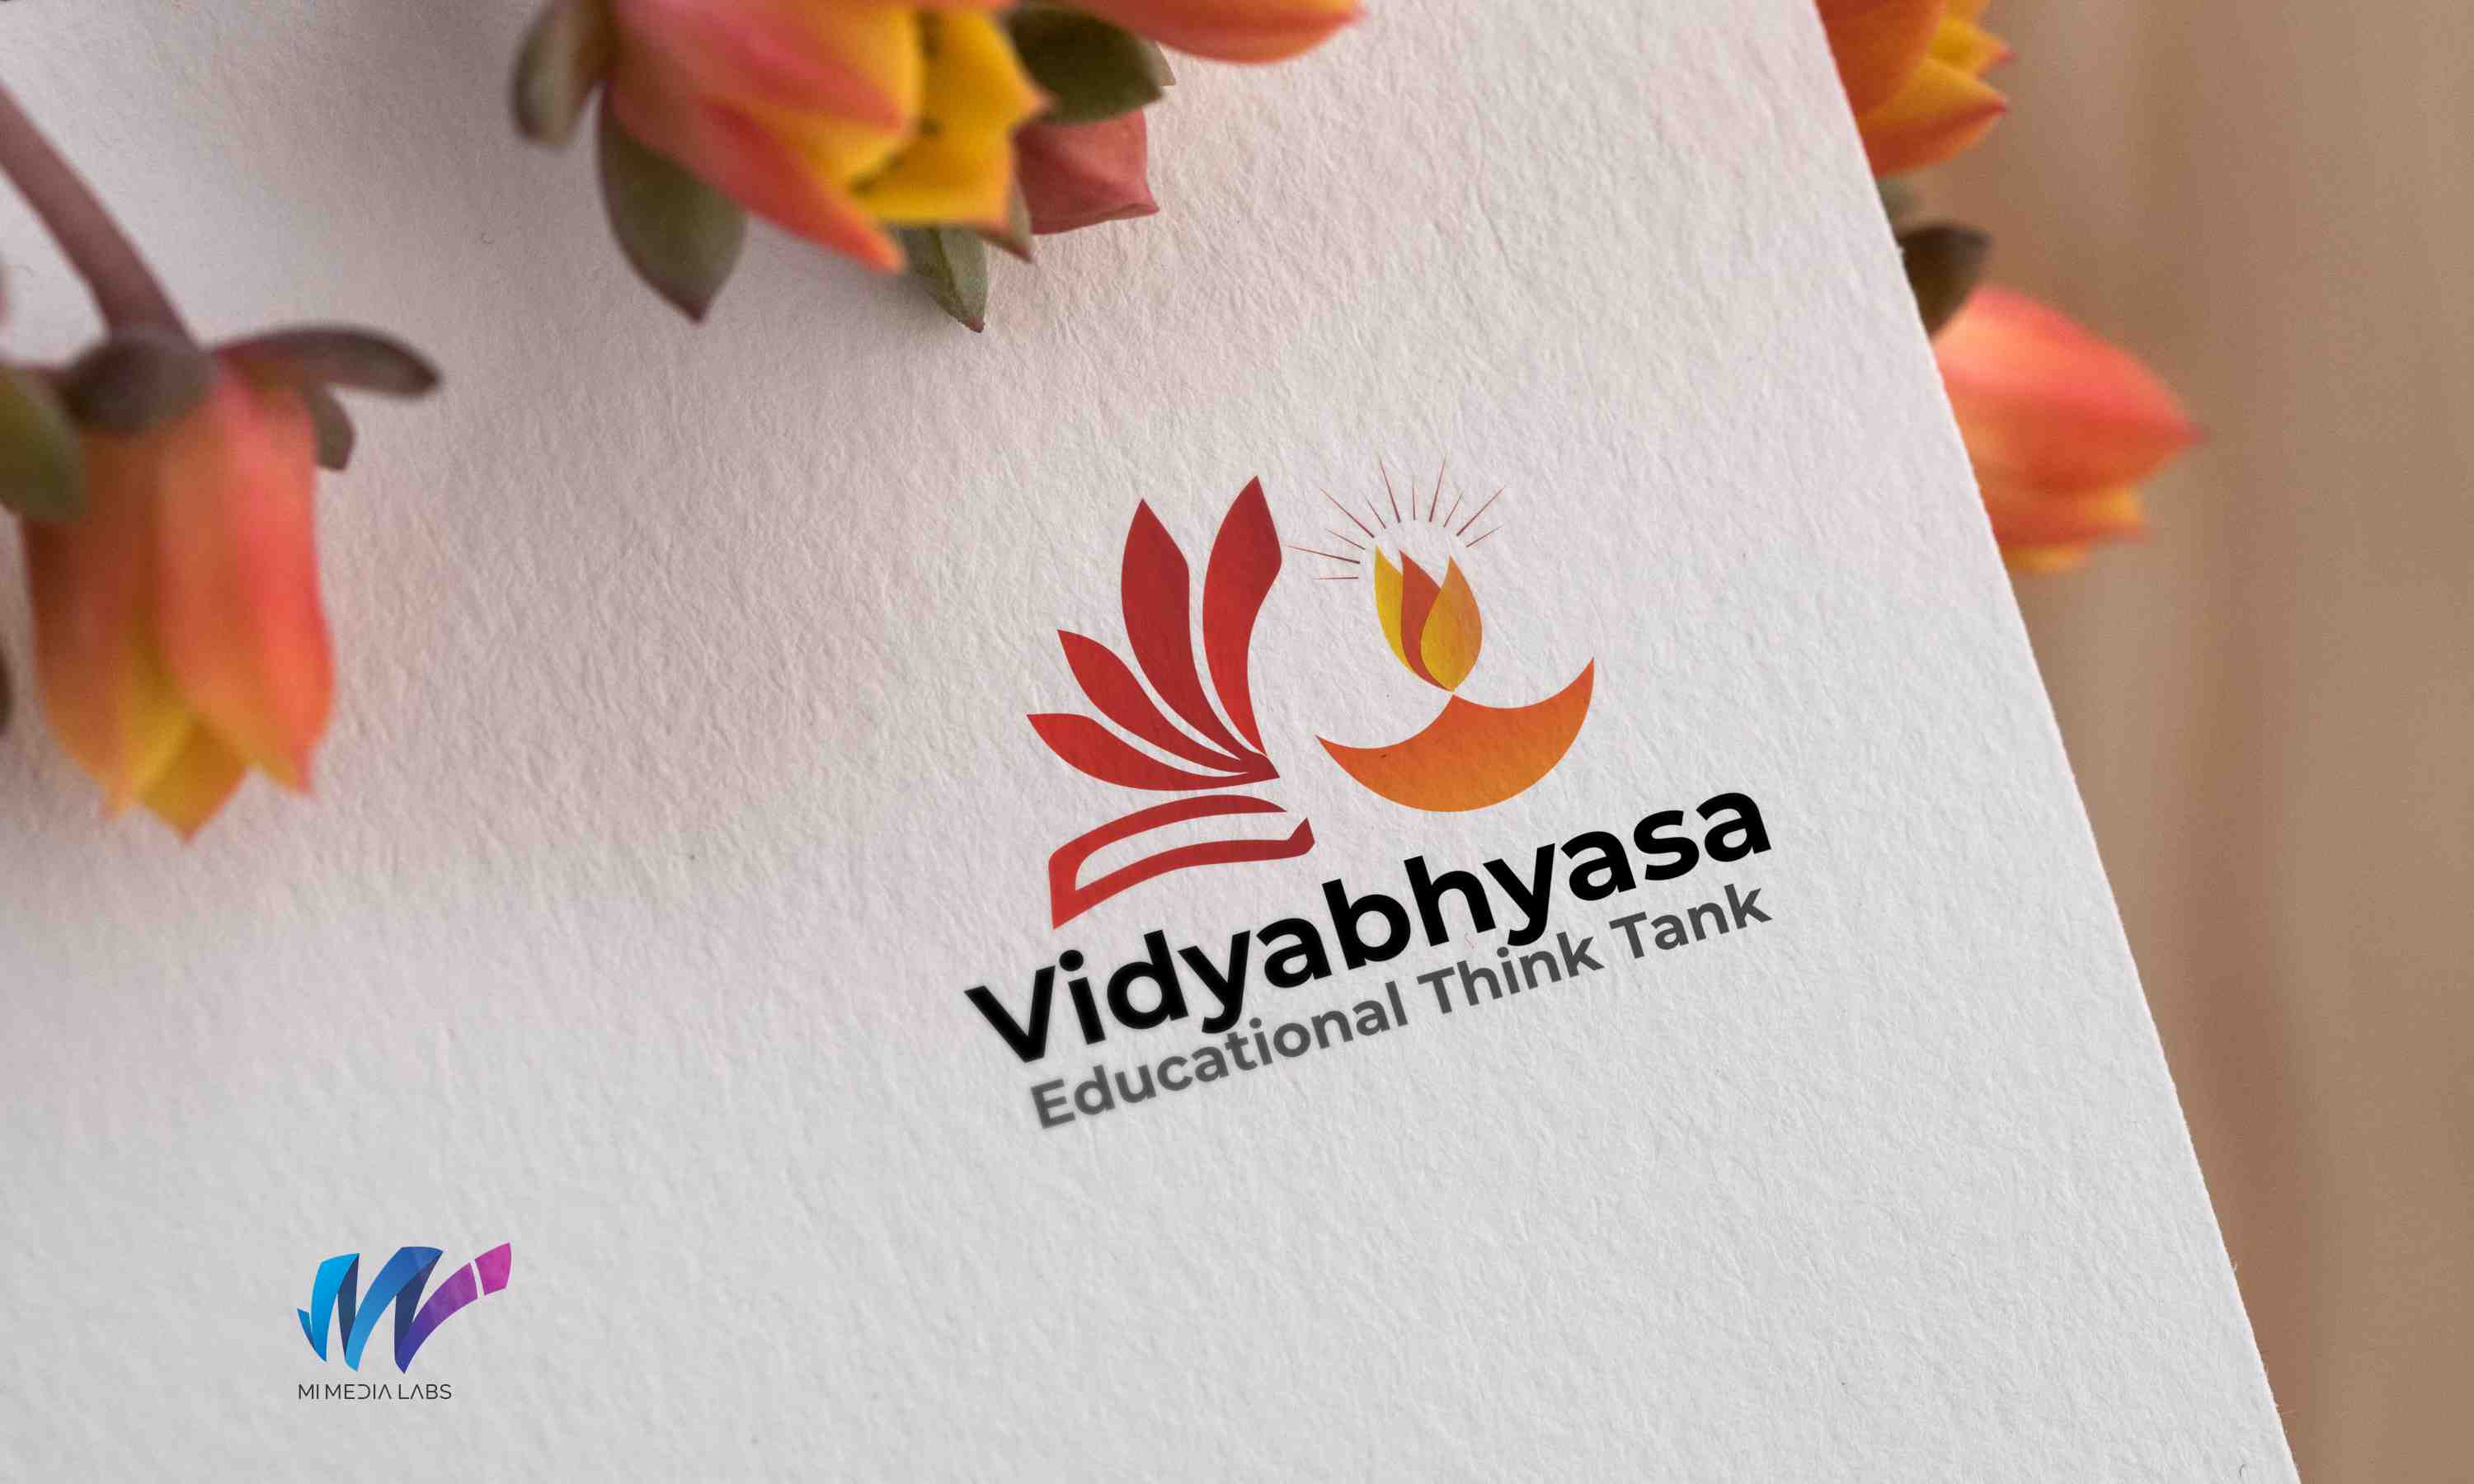 Vidhyabhayasa